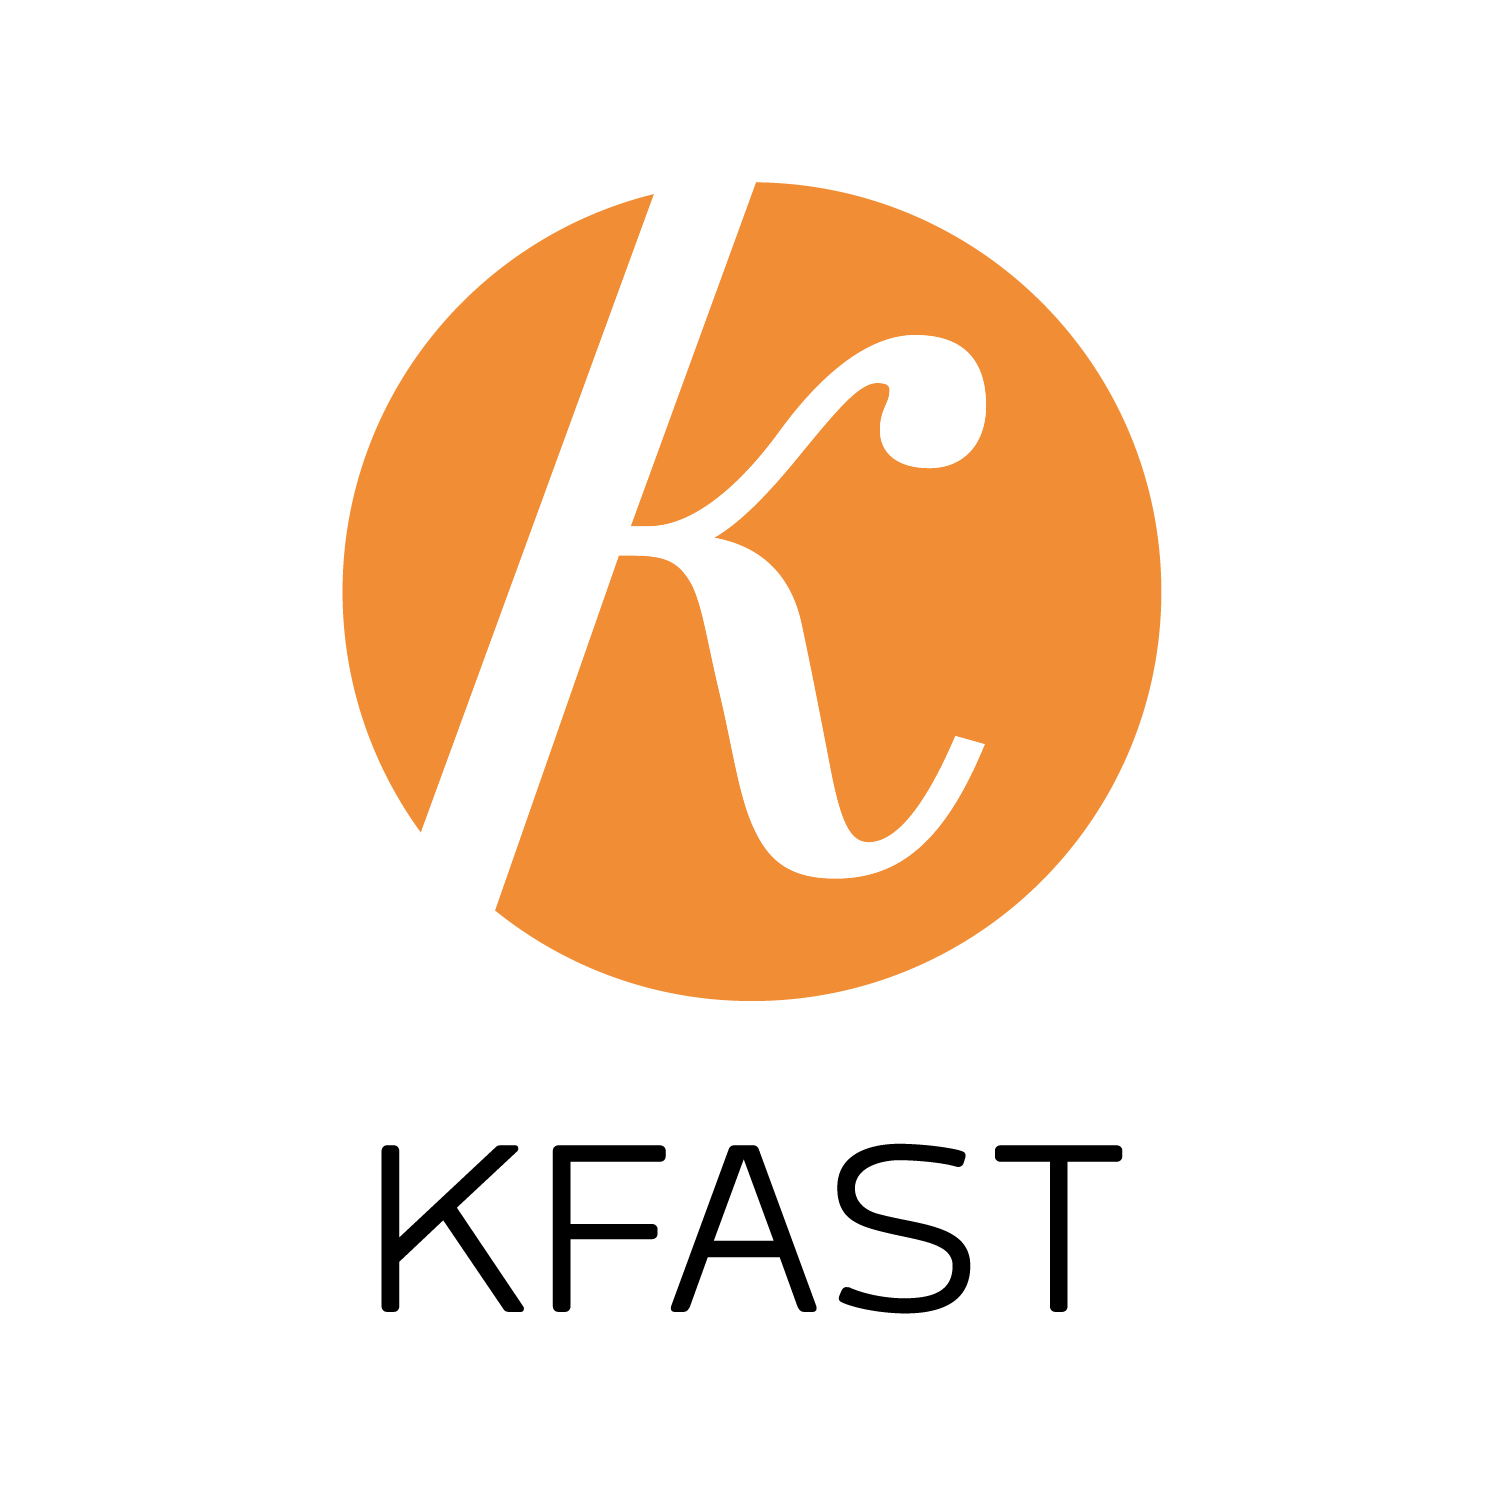 Kfast